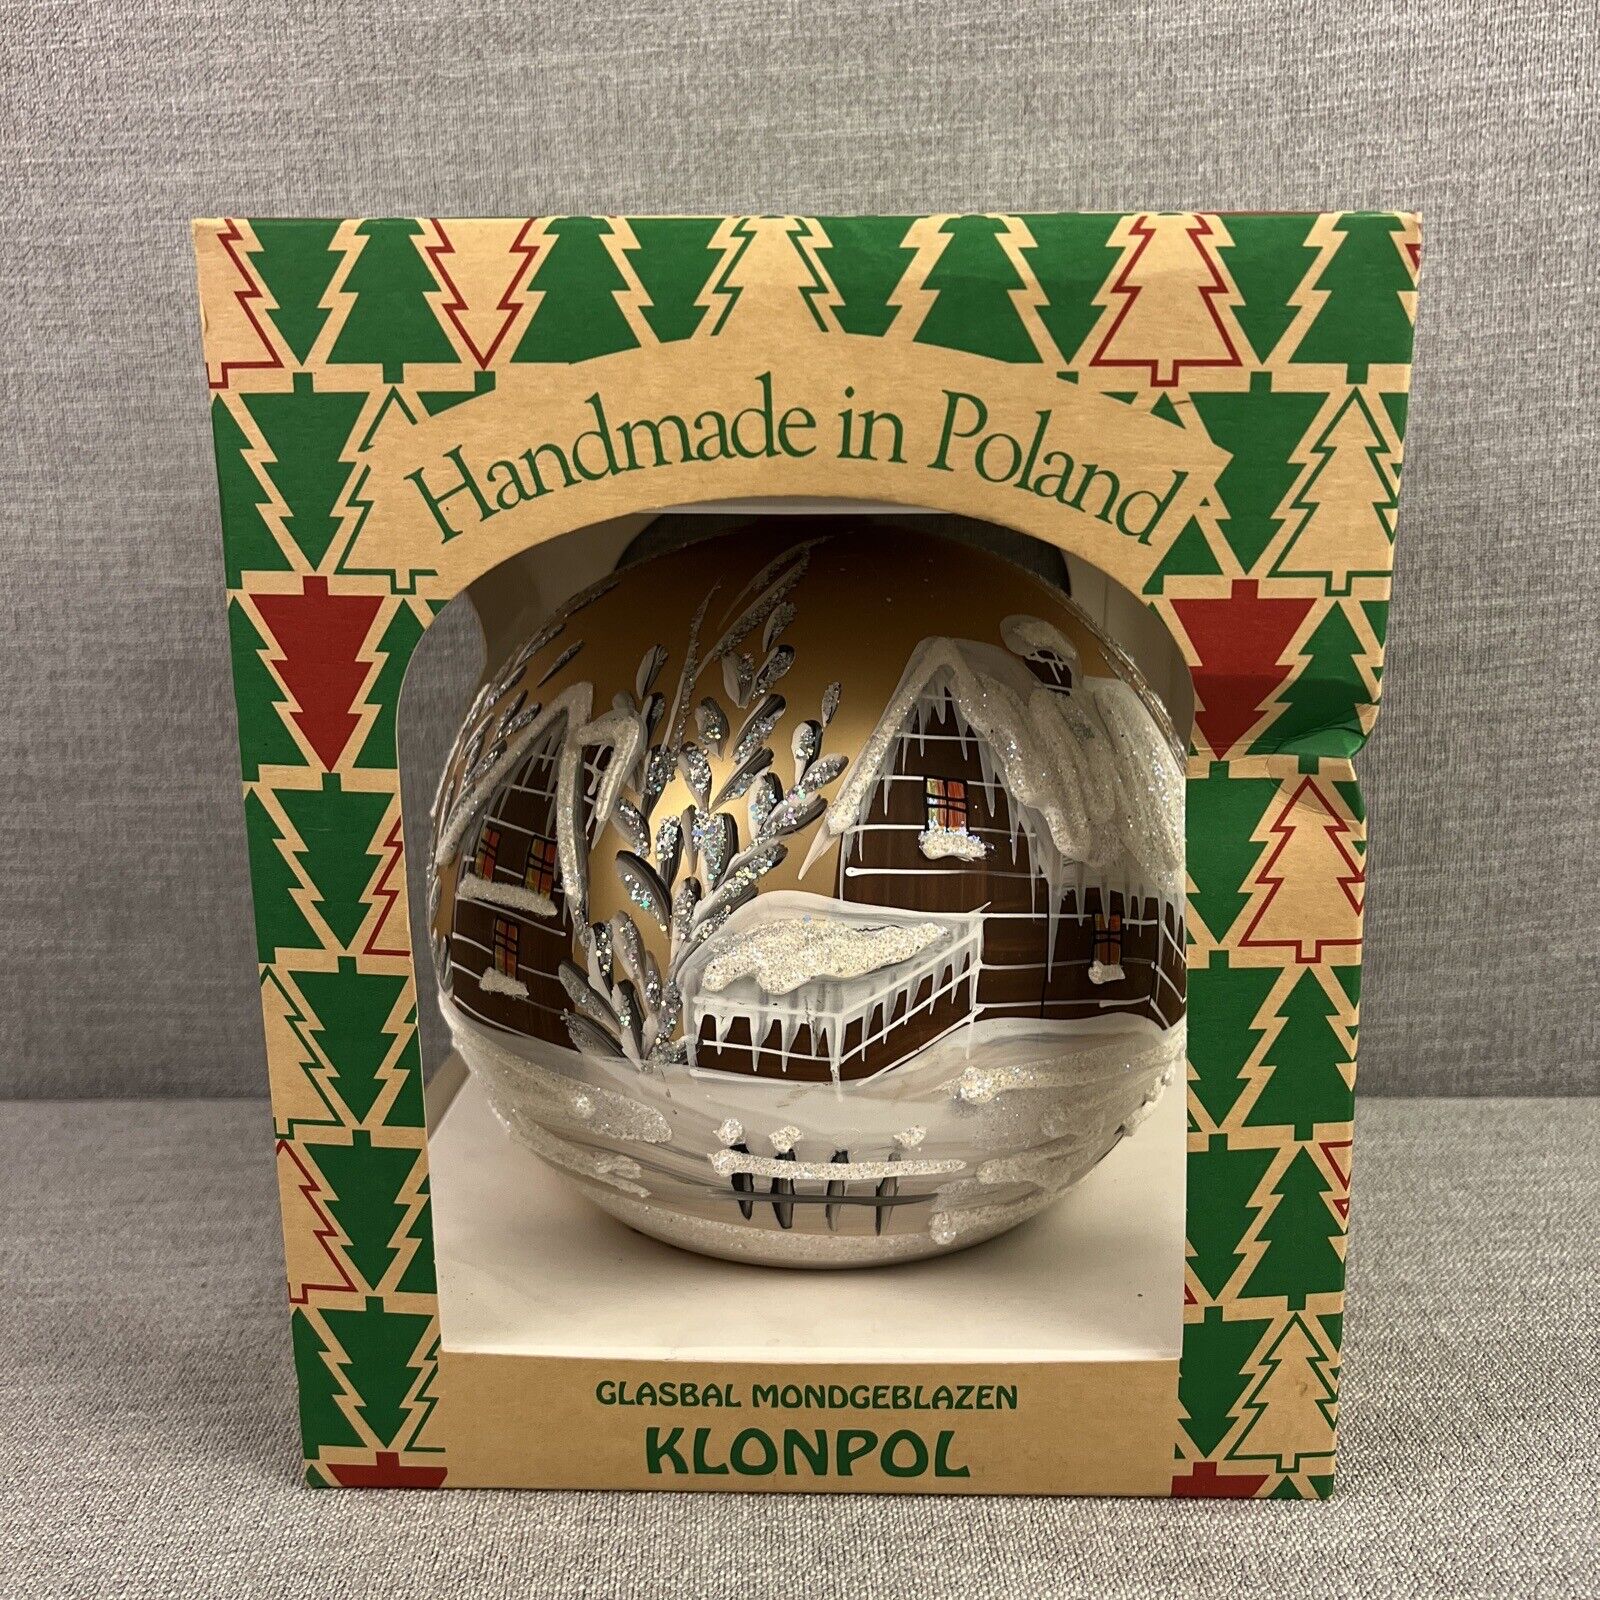 Klonpol Handmake in Poland Large Mouthblown Glass Ornament Gingerbread House